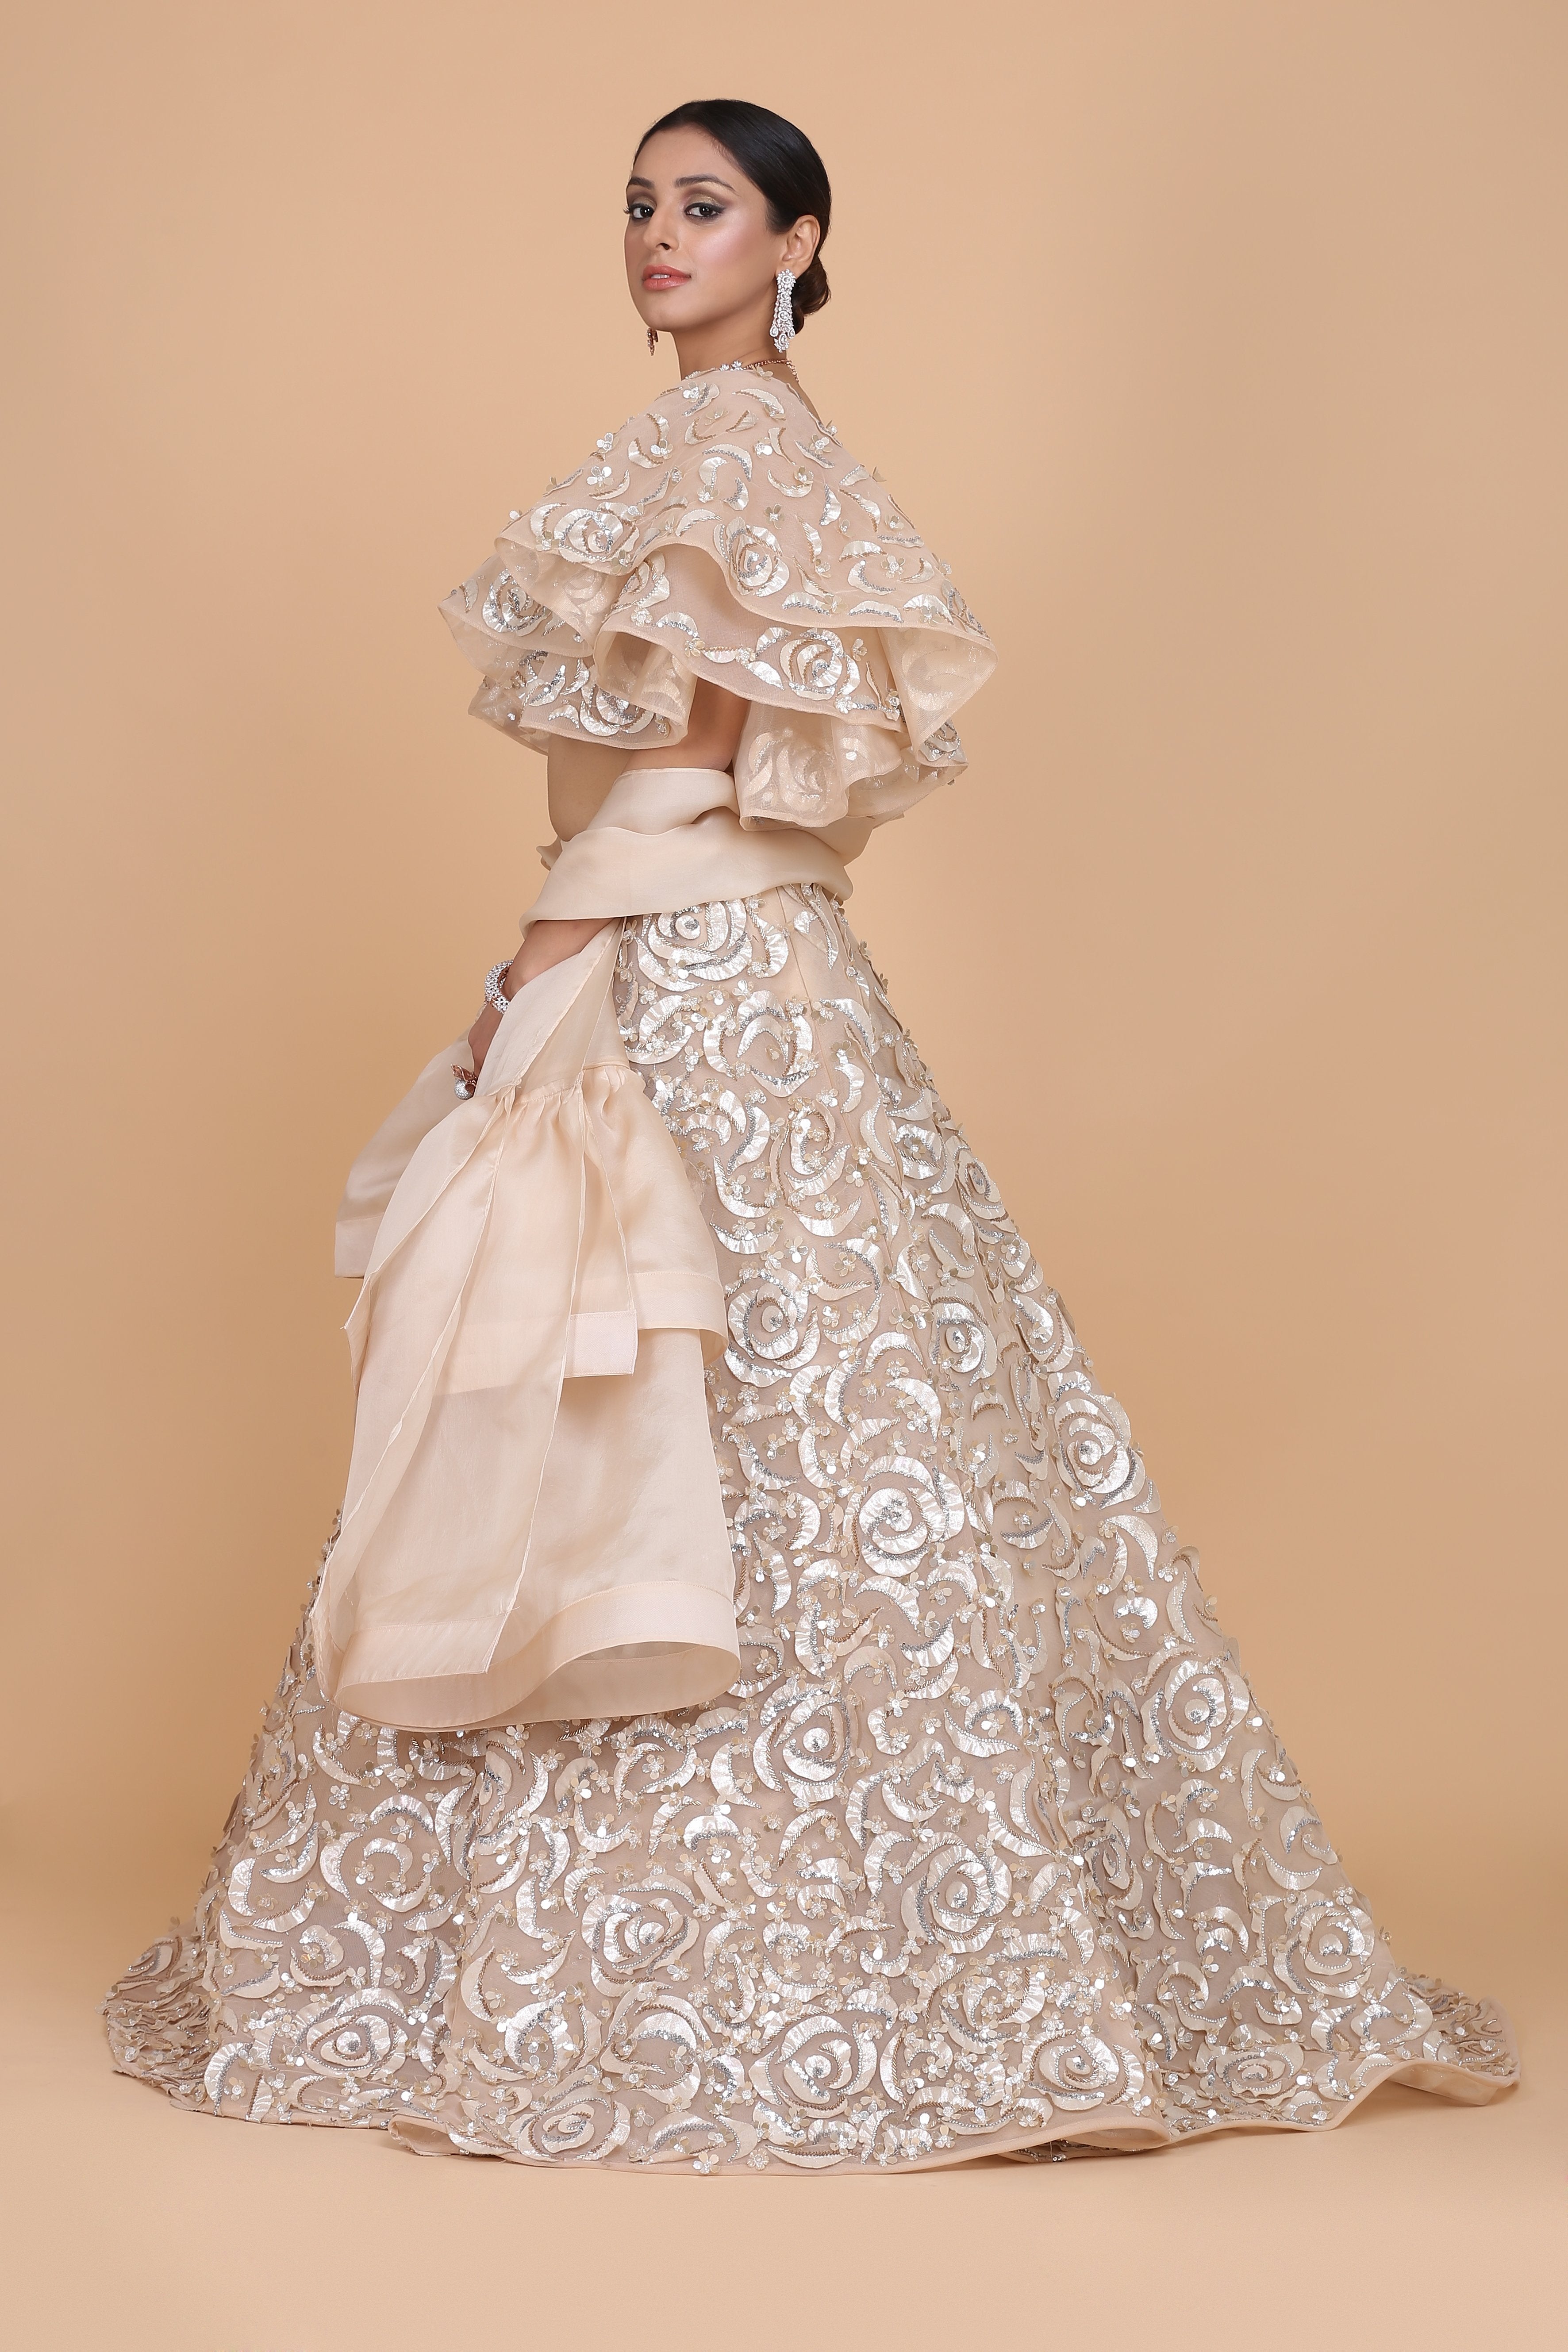 Amit GT - Rossette Embroidered Bridal Lehenga Set